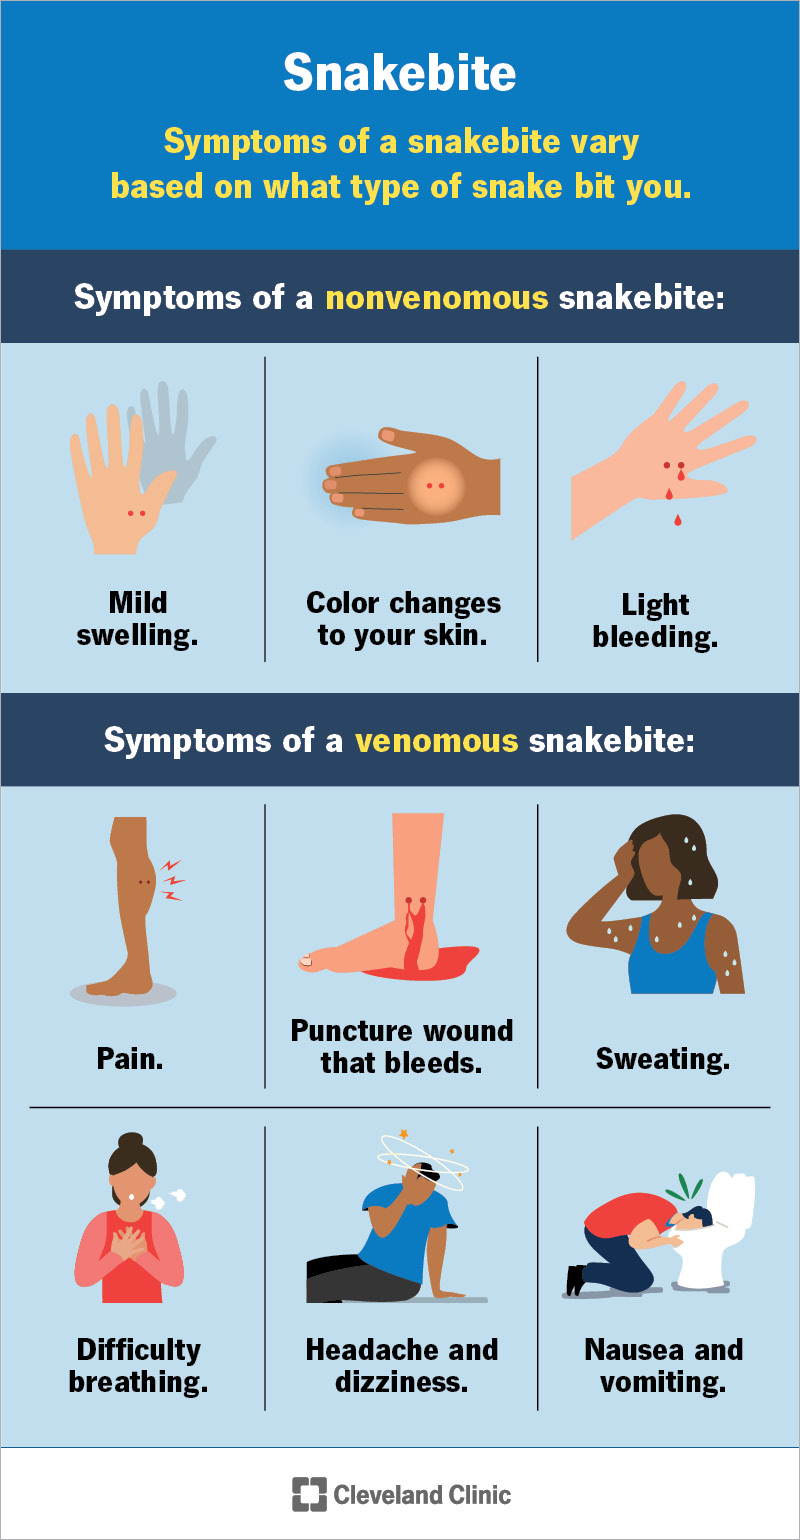 Symptoms of a nonvenomous snakebite and a venomous snakebite